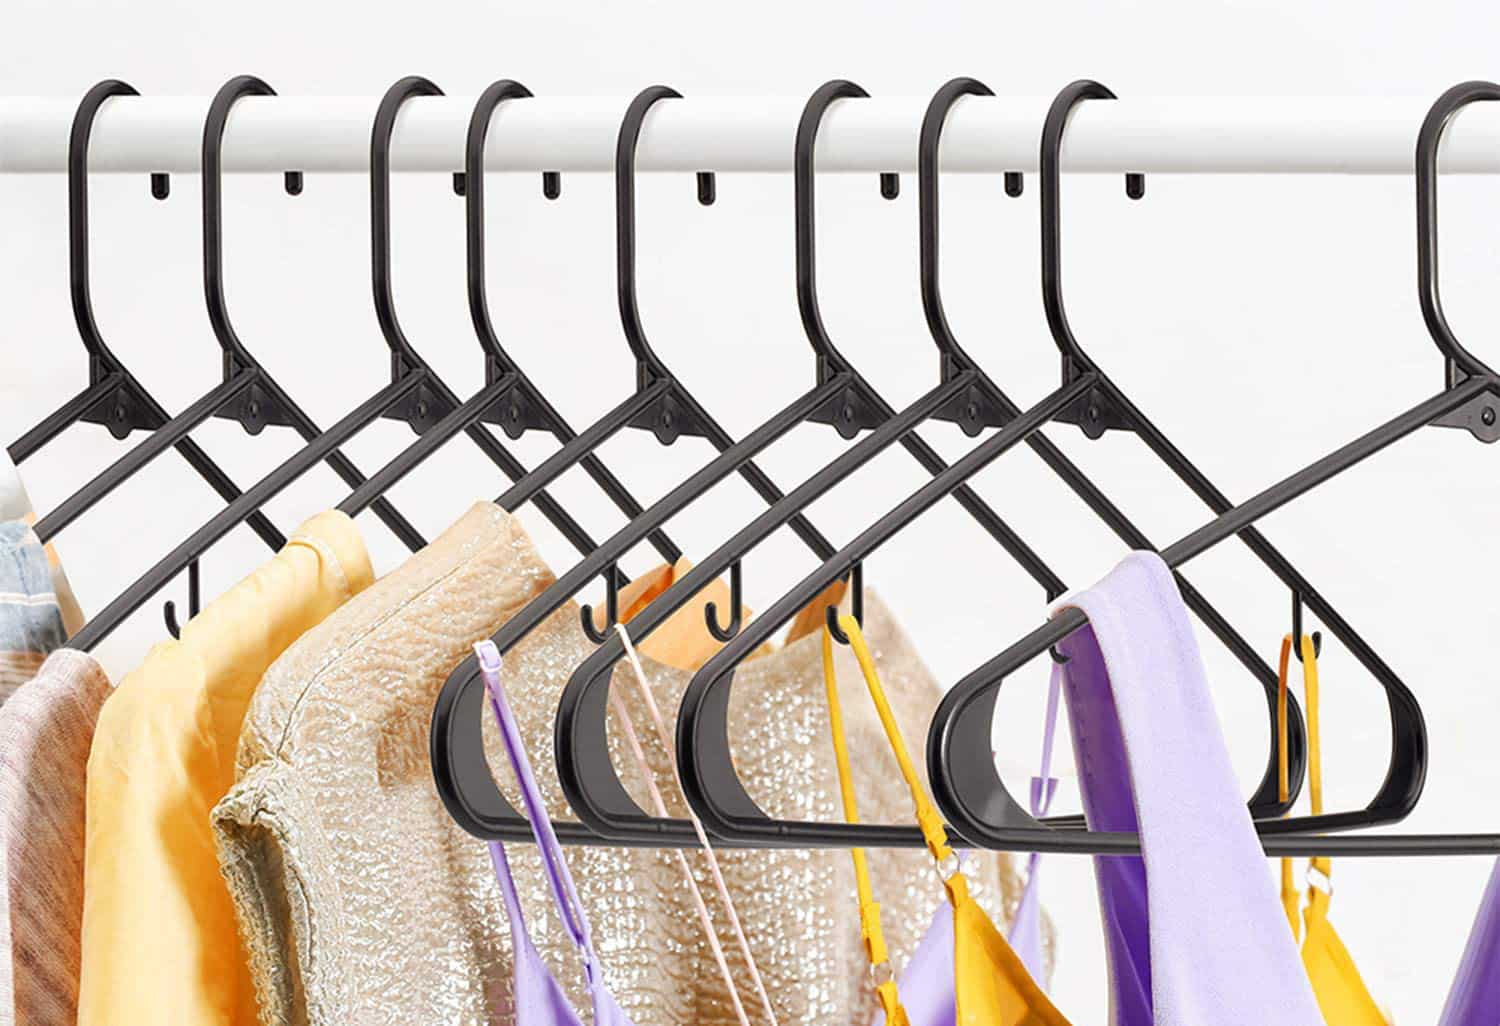 https://www.goonproducts.com/wp-content/uploads/2020/08/Best-Plastic-Clothes-Hangers-in-2020.jpg